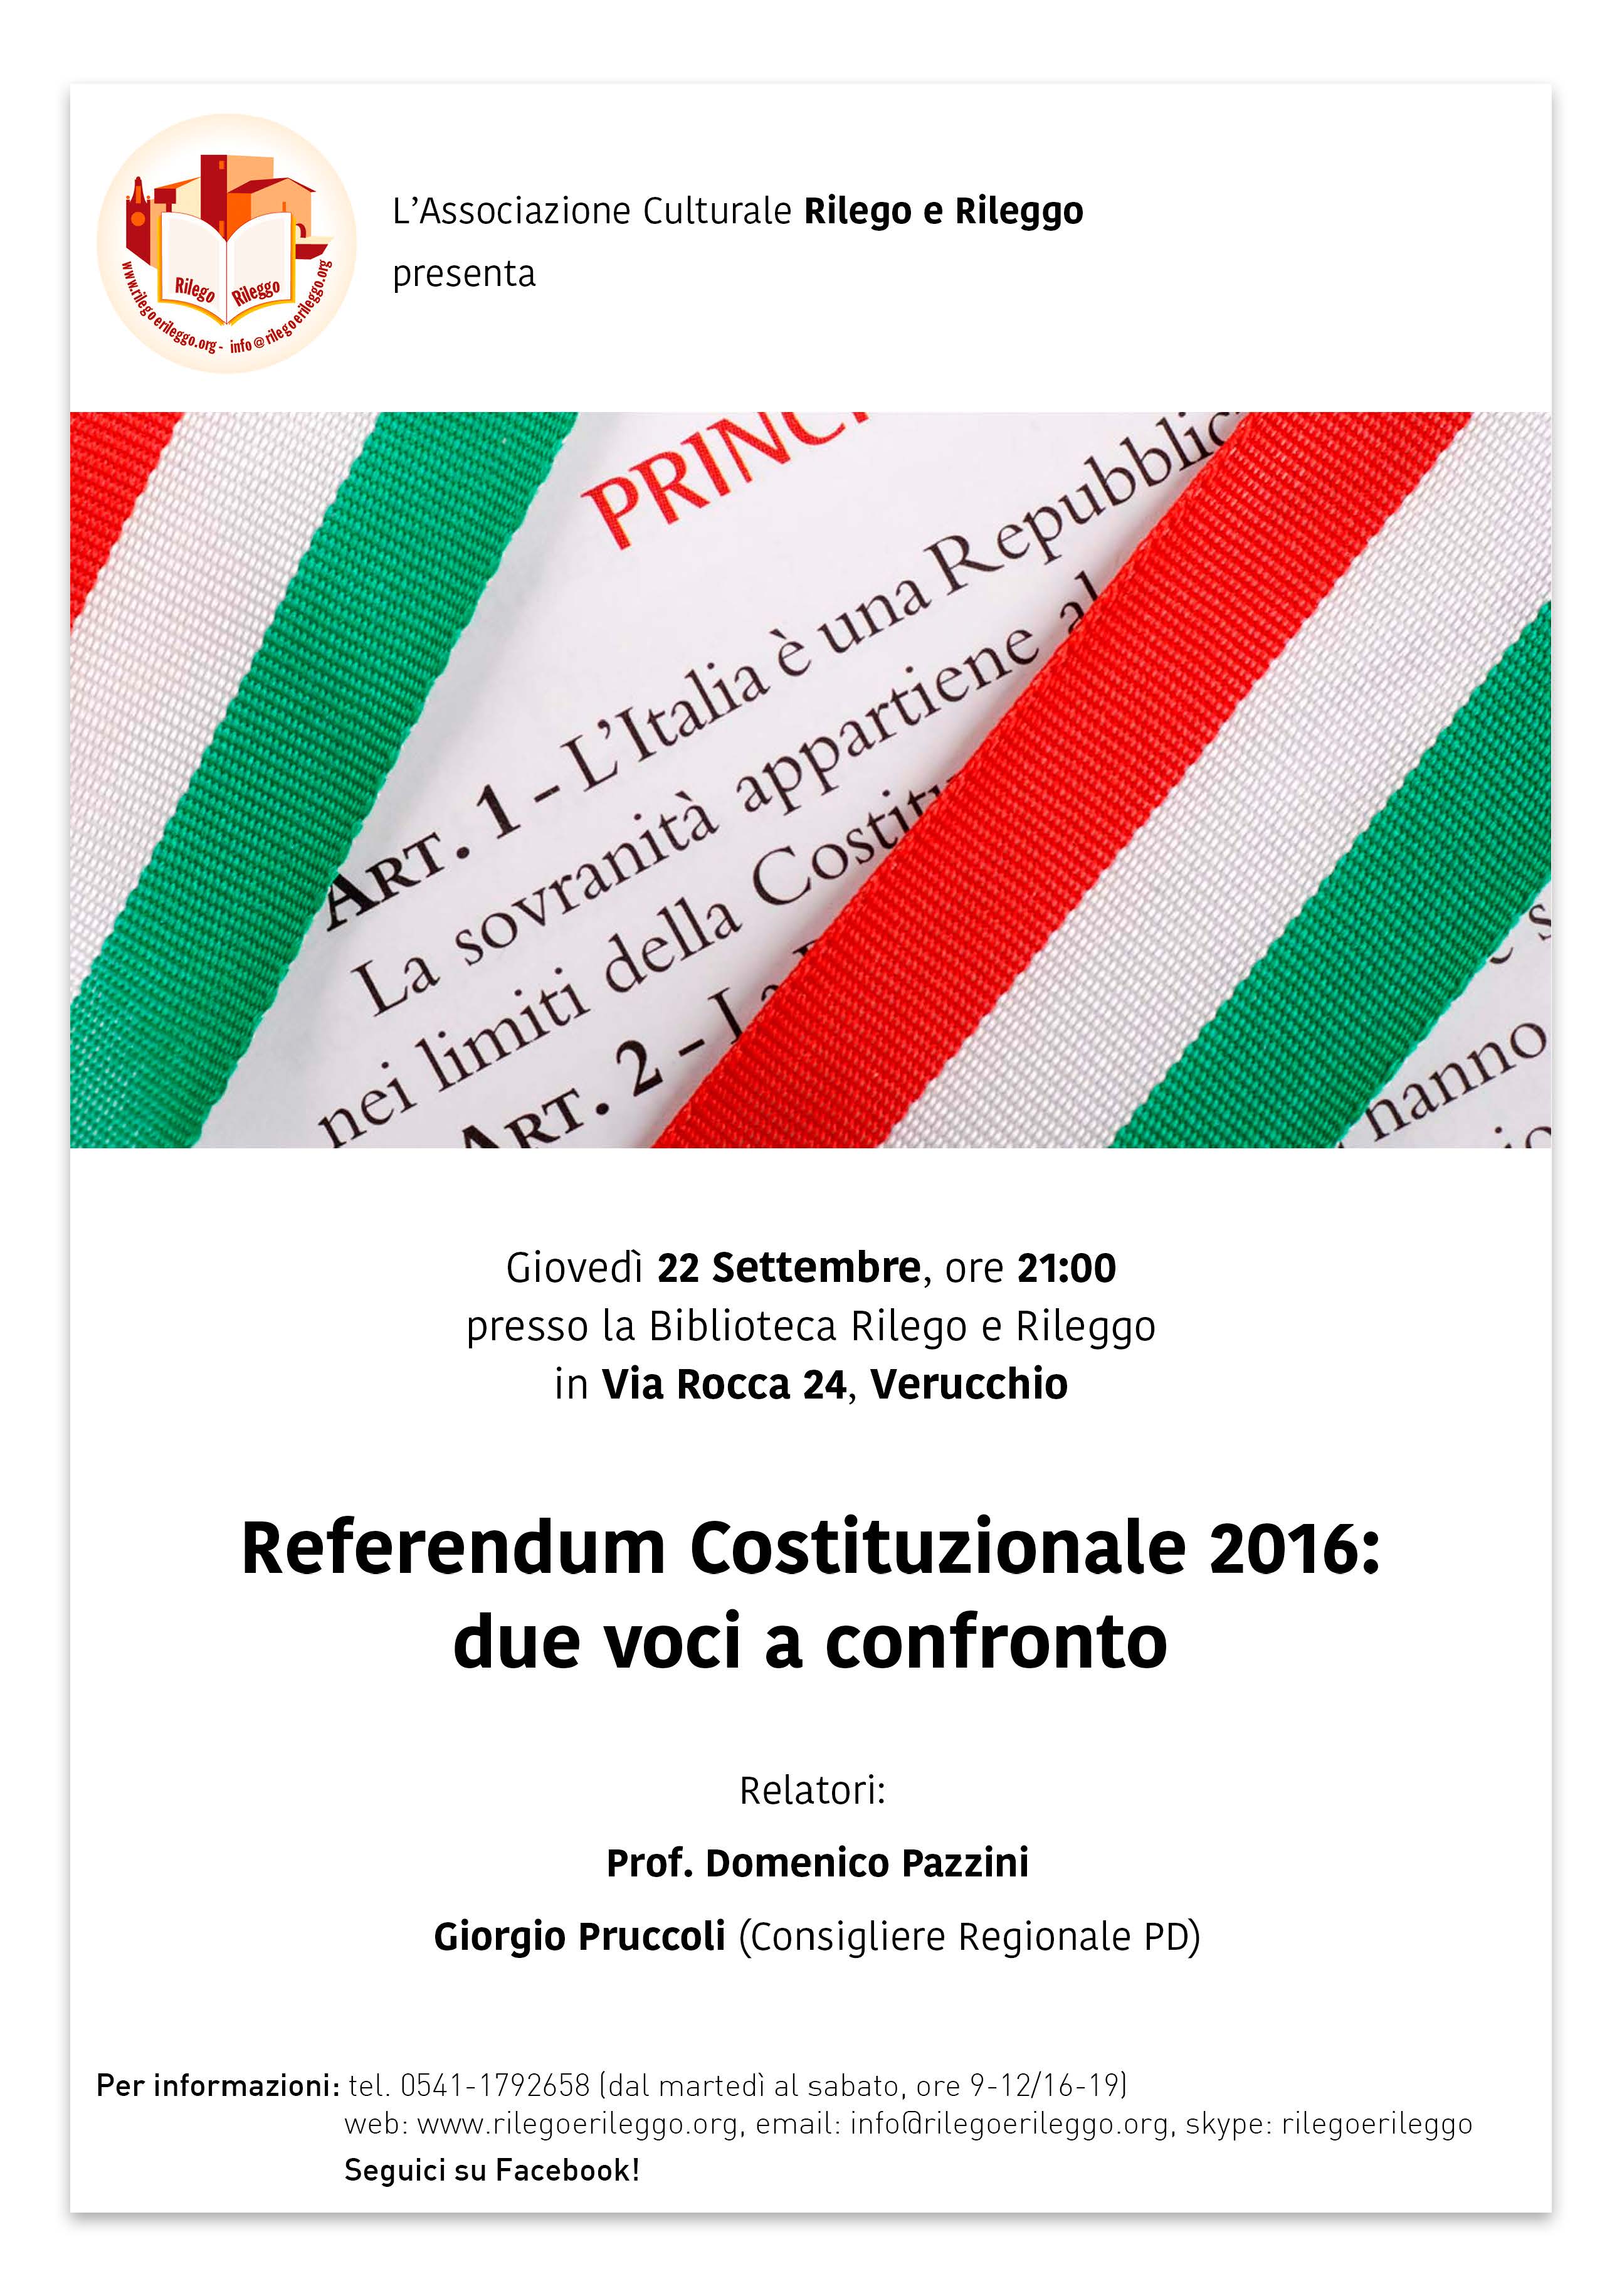 Referendum Costituzionale 2016: due voci a confronto